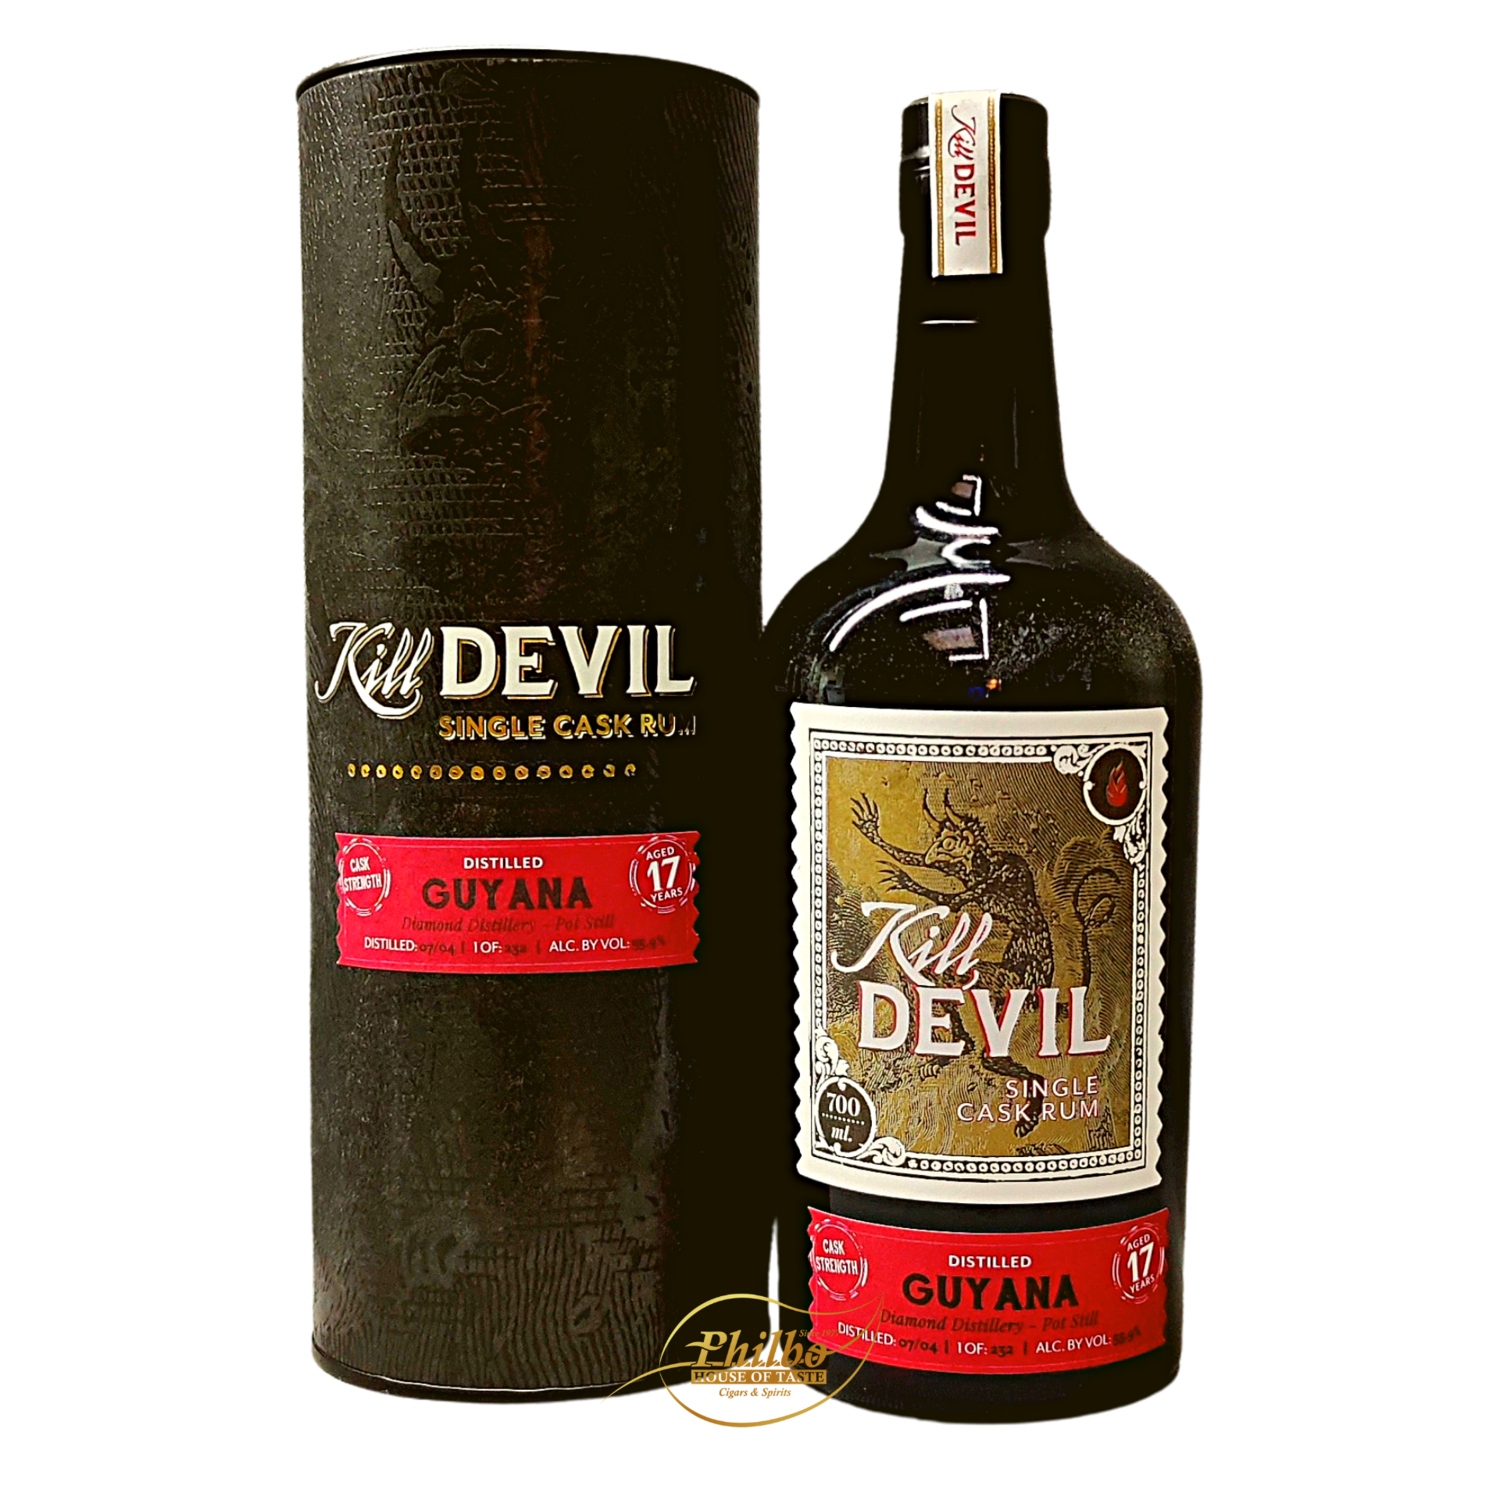 Kill Devil Guyana Diamond 17y Single Cask strength 55,9% 232 bottles